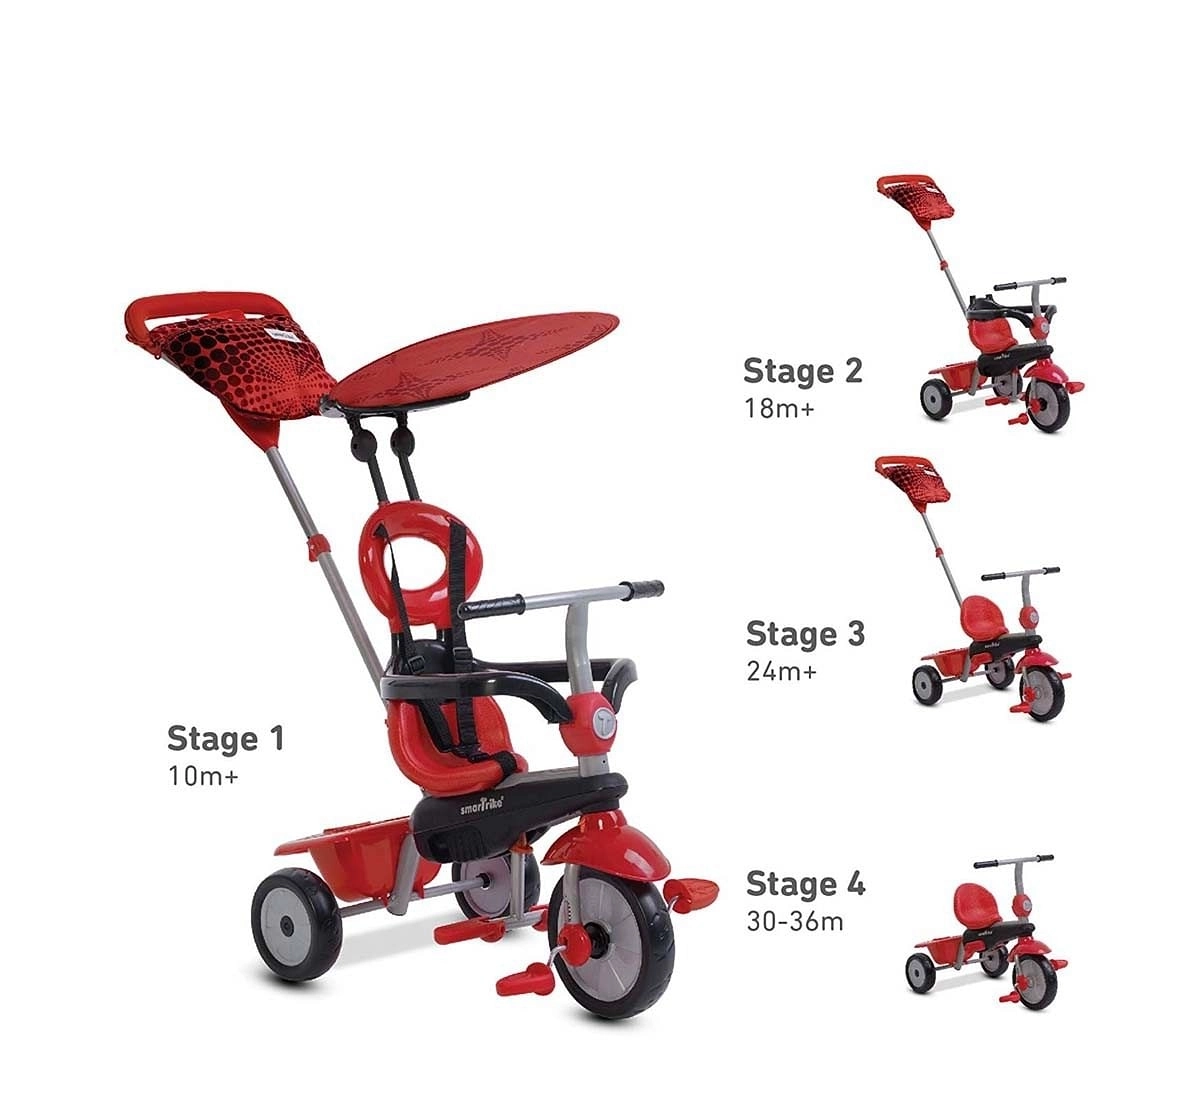 Smart Trike Vanilla 4 In 1 Baby Trike - Red Bikes for Kids age 10M+ 